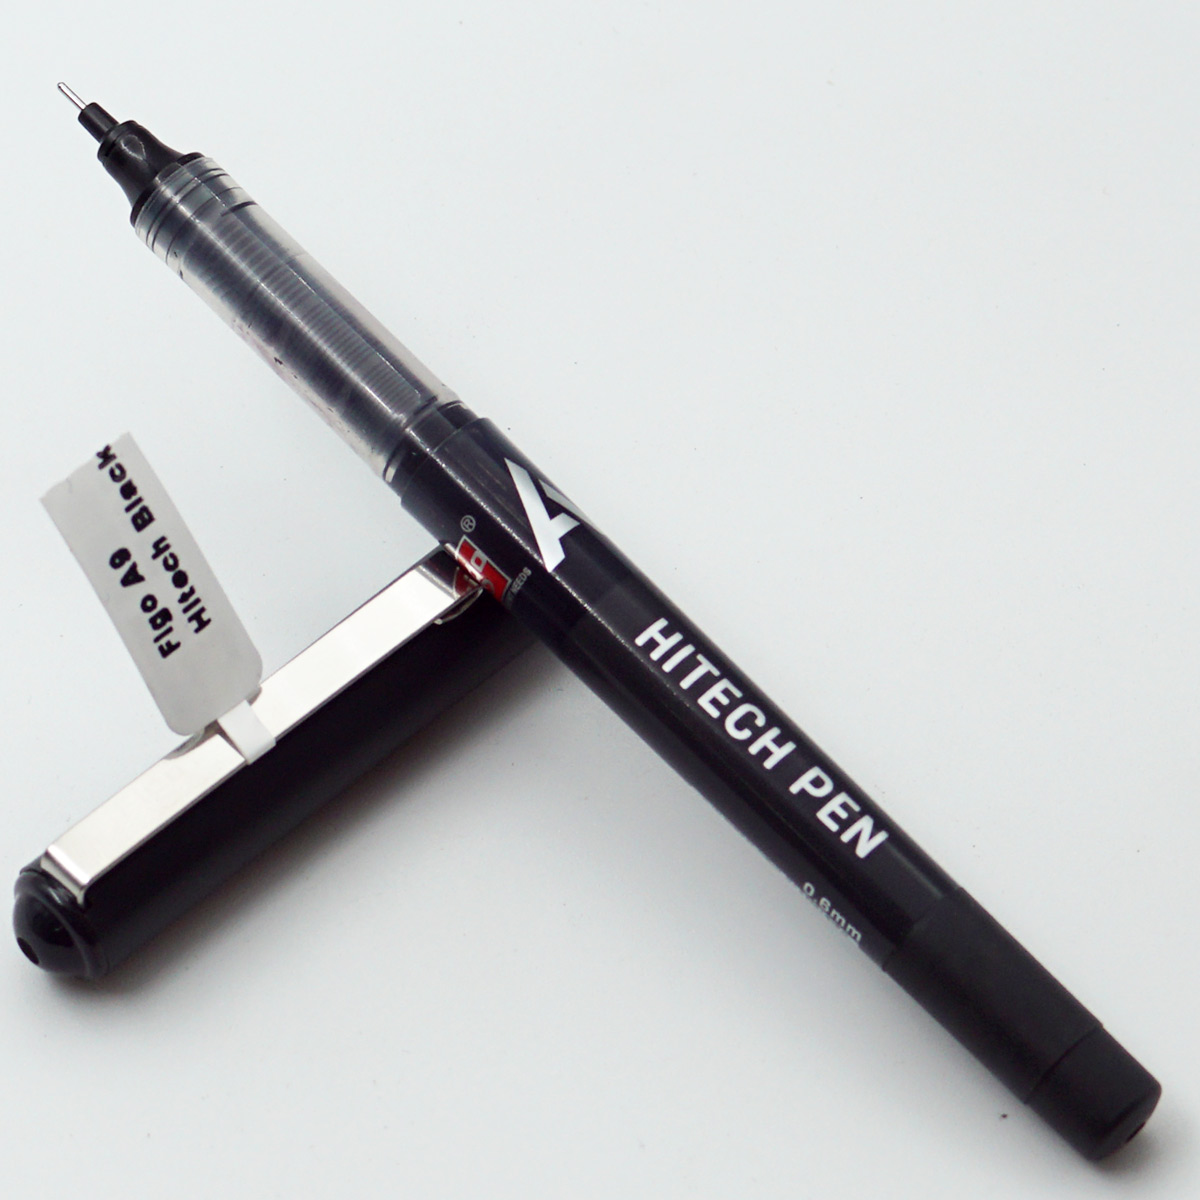 Figo A9 Hitech Black Color Body With Silver Clip 0.6mm Tip Black Writing Cap Type Gel Pen SKU24557